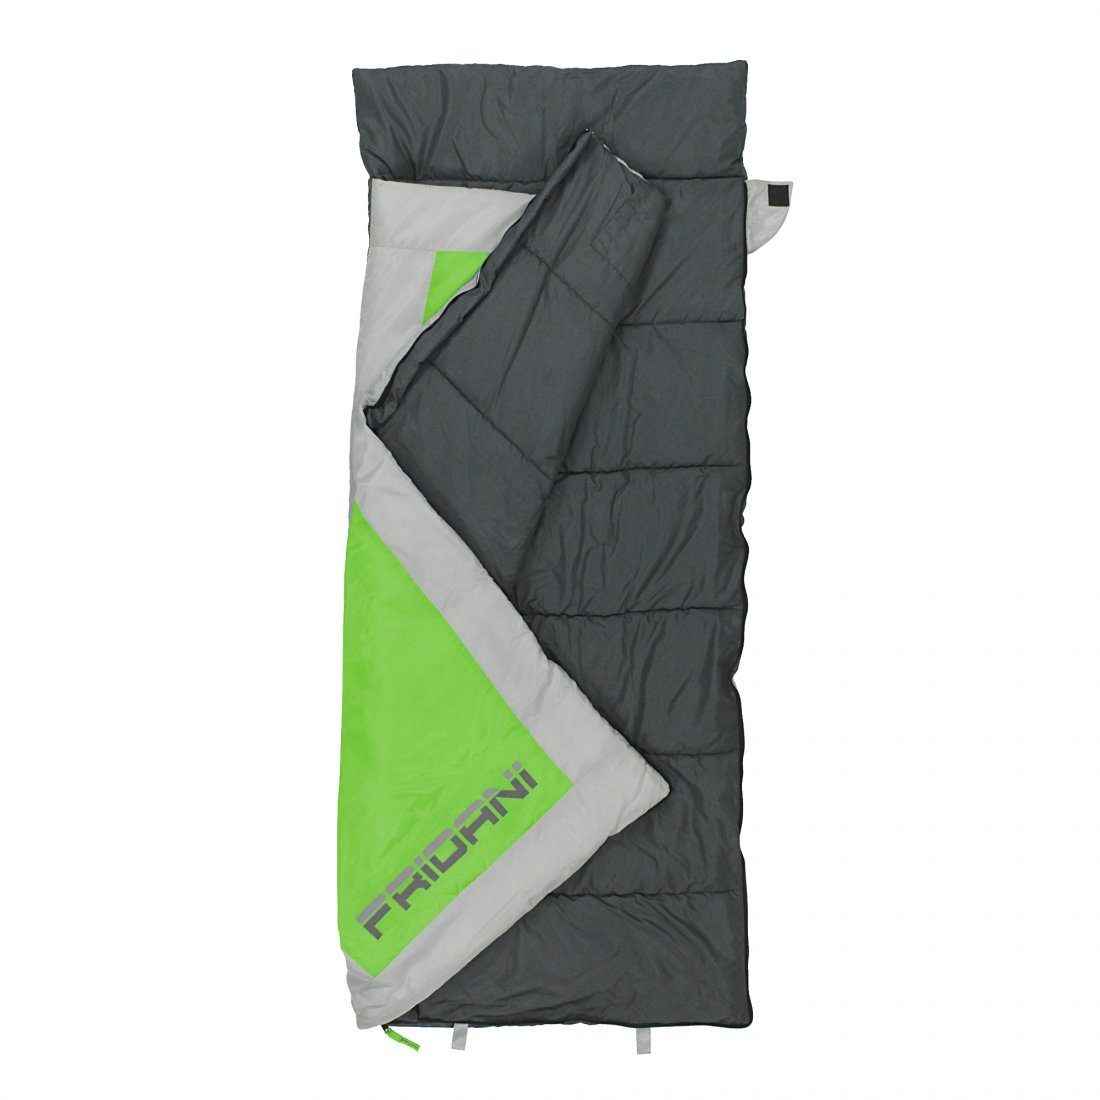 FRIDANI Deckenschlafsack QG Grün wasserabweisend Deckenschlafsack warm Kinderschlafsack 170x70